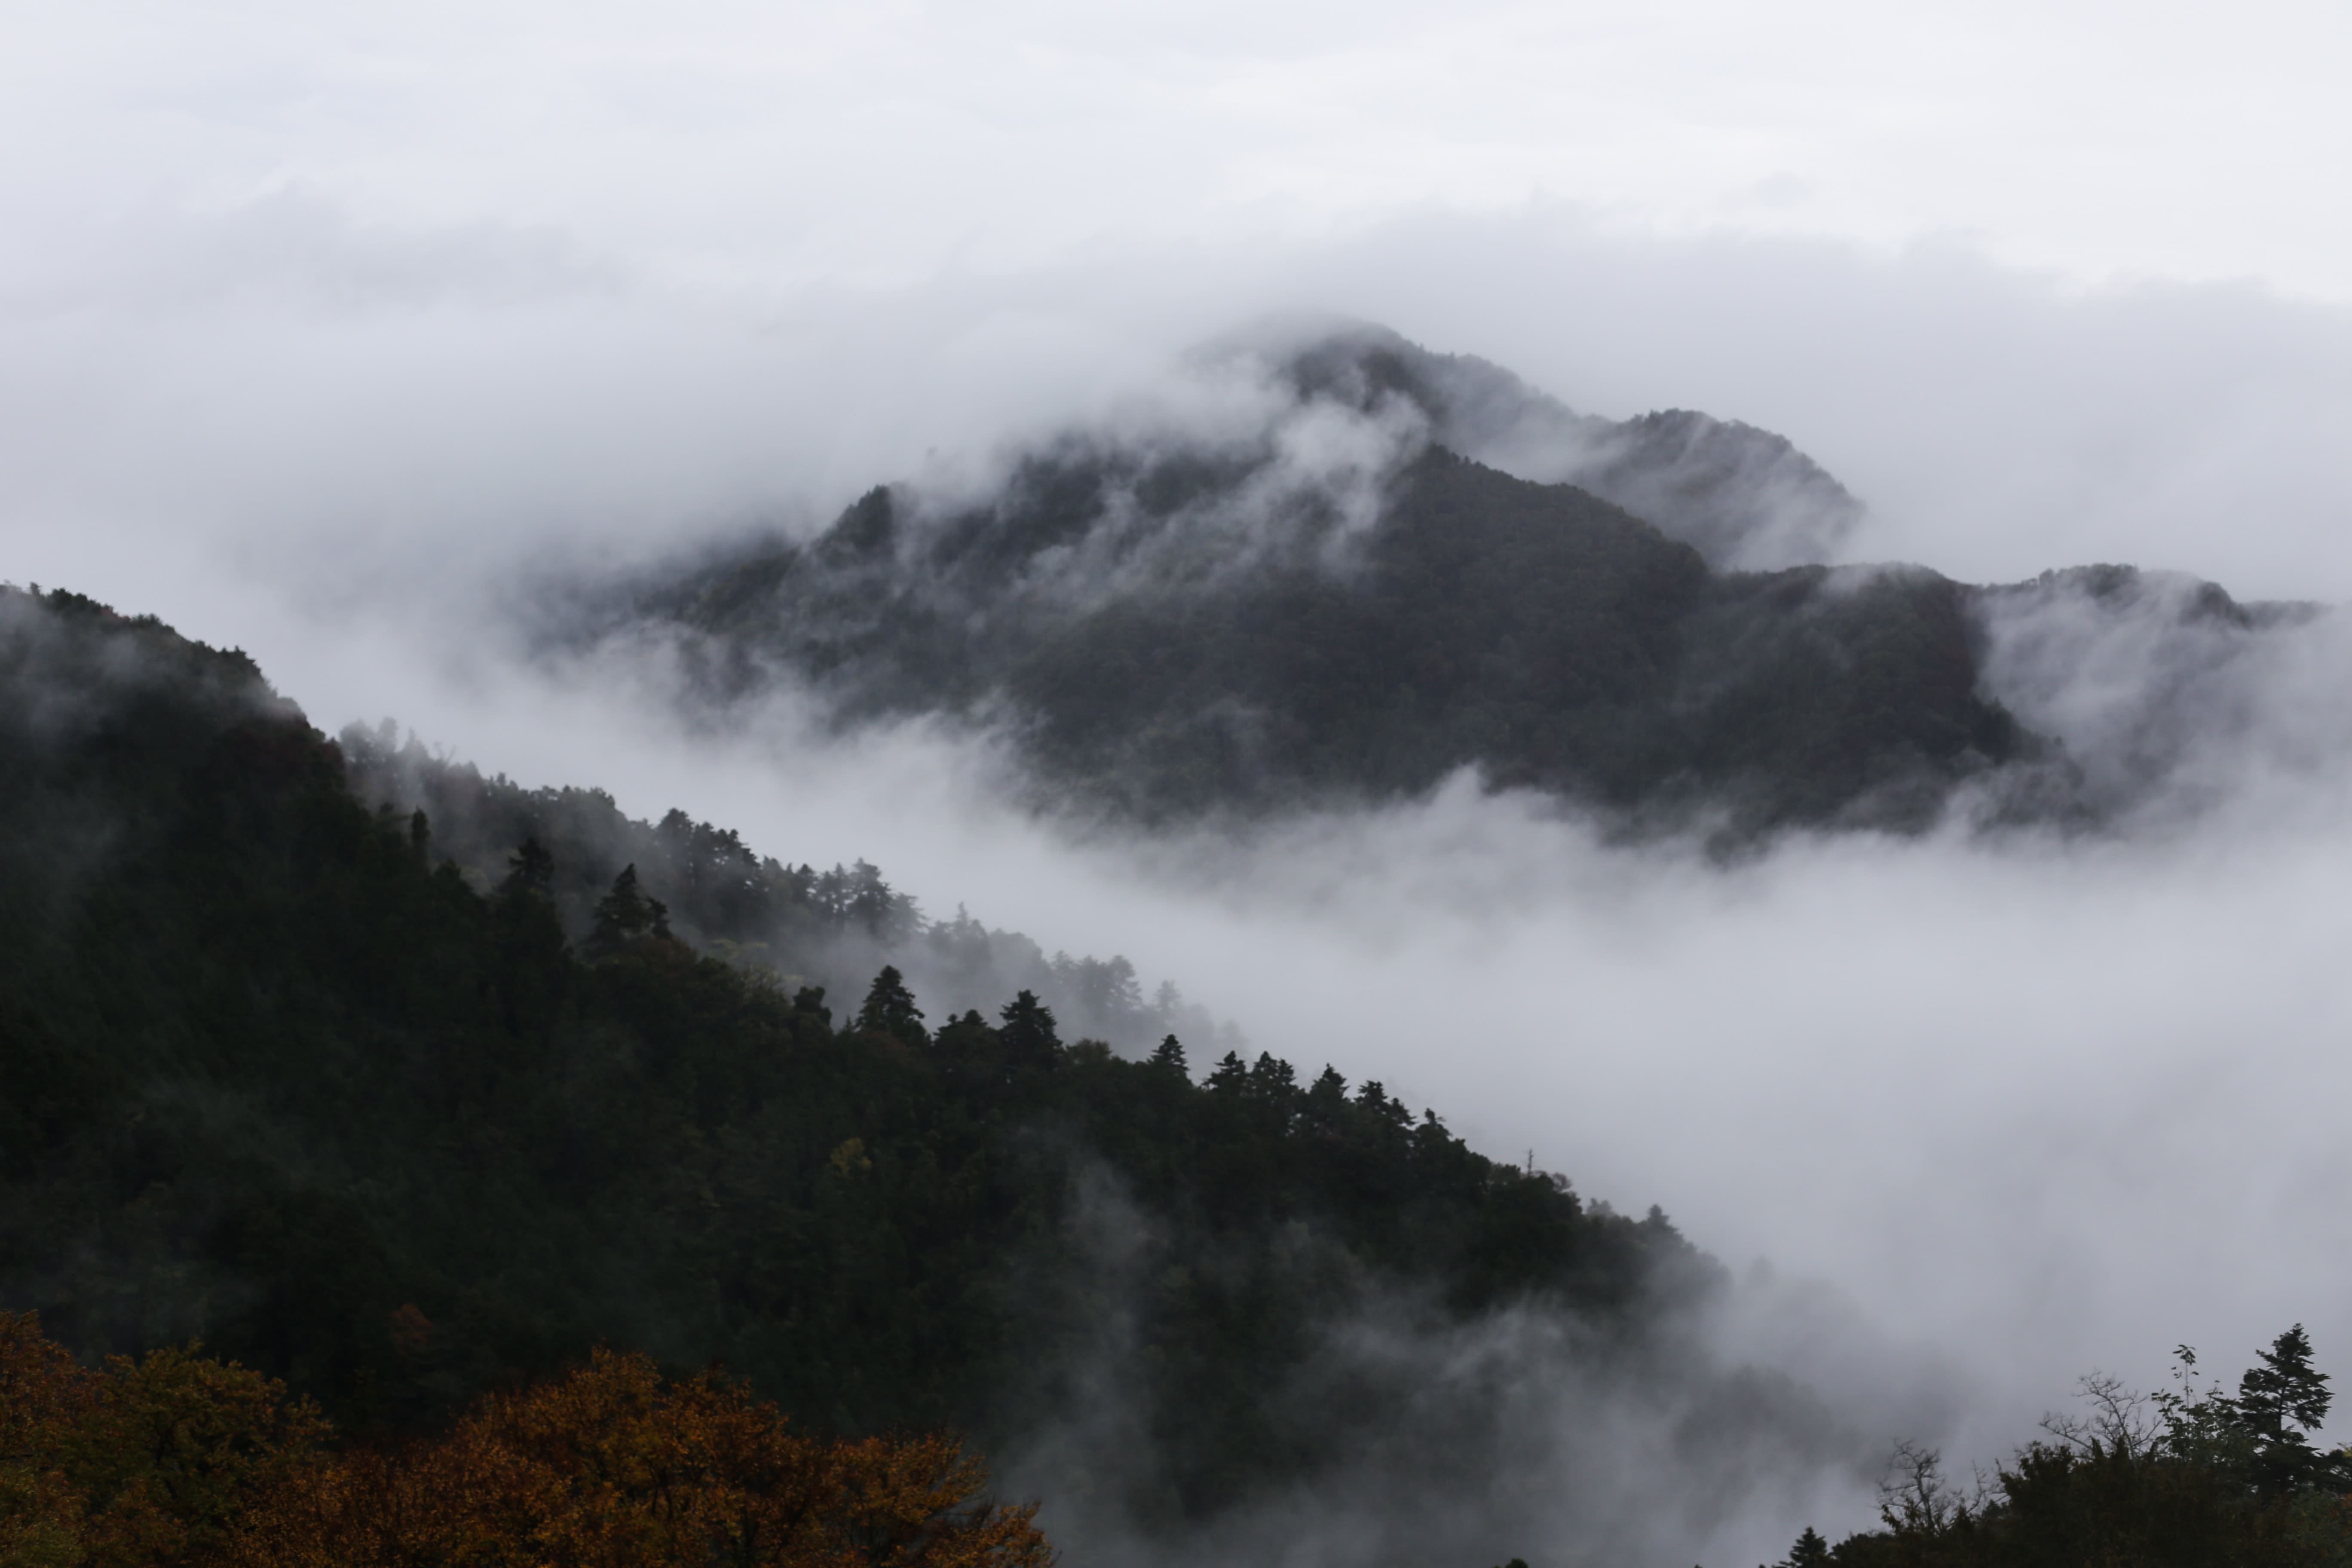 Tree covered mountainside shrouded in mist